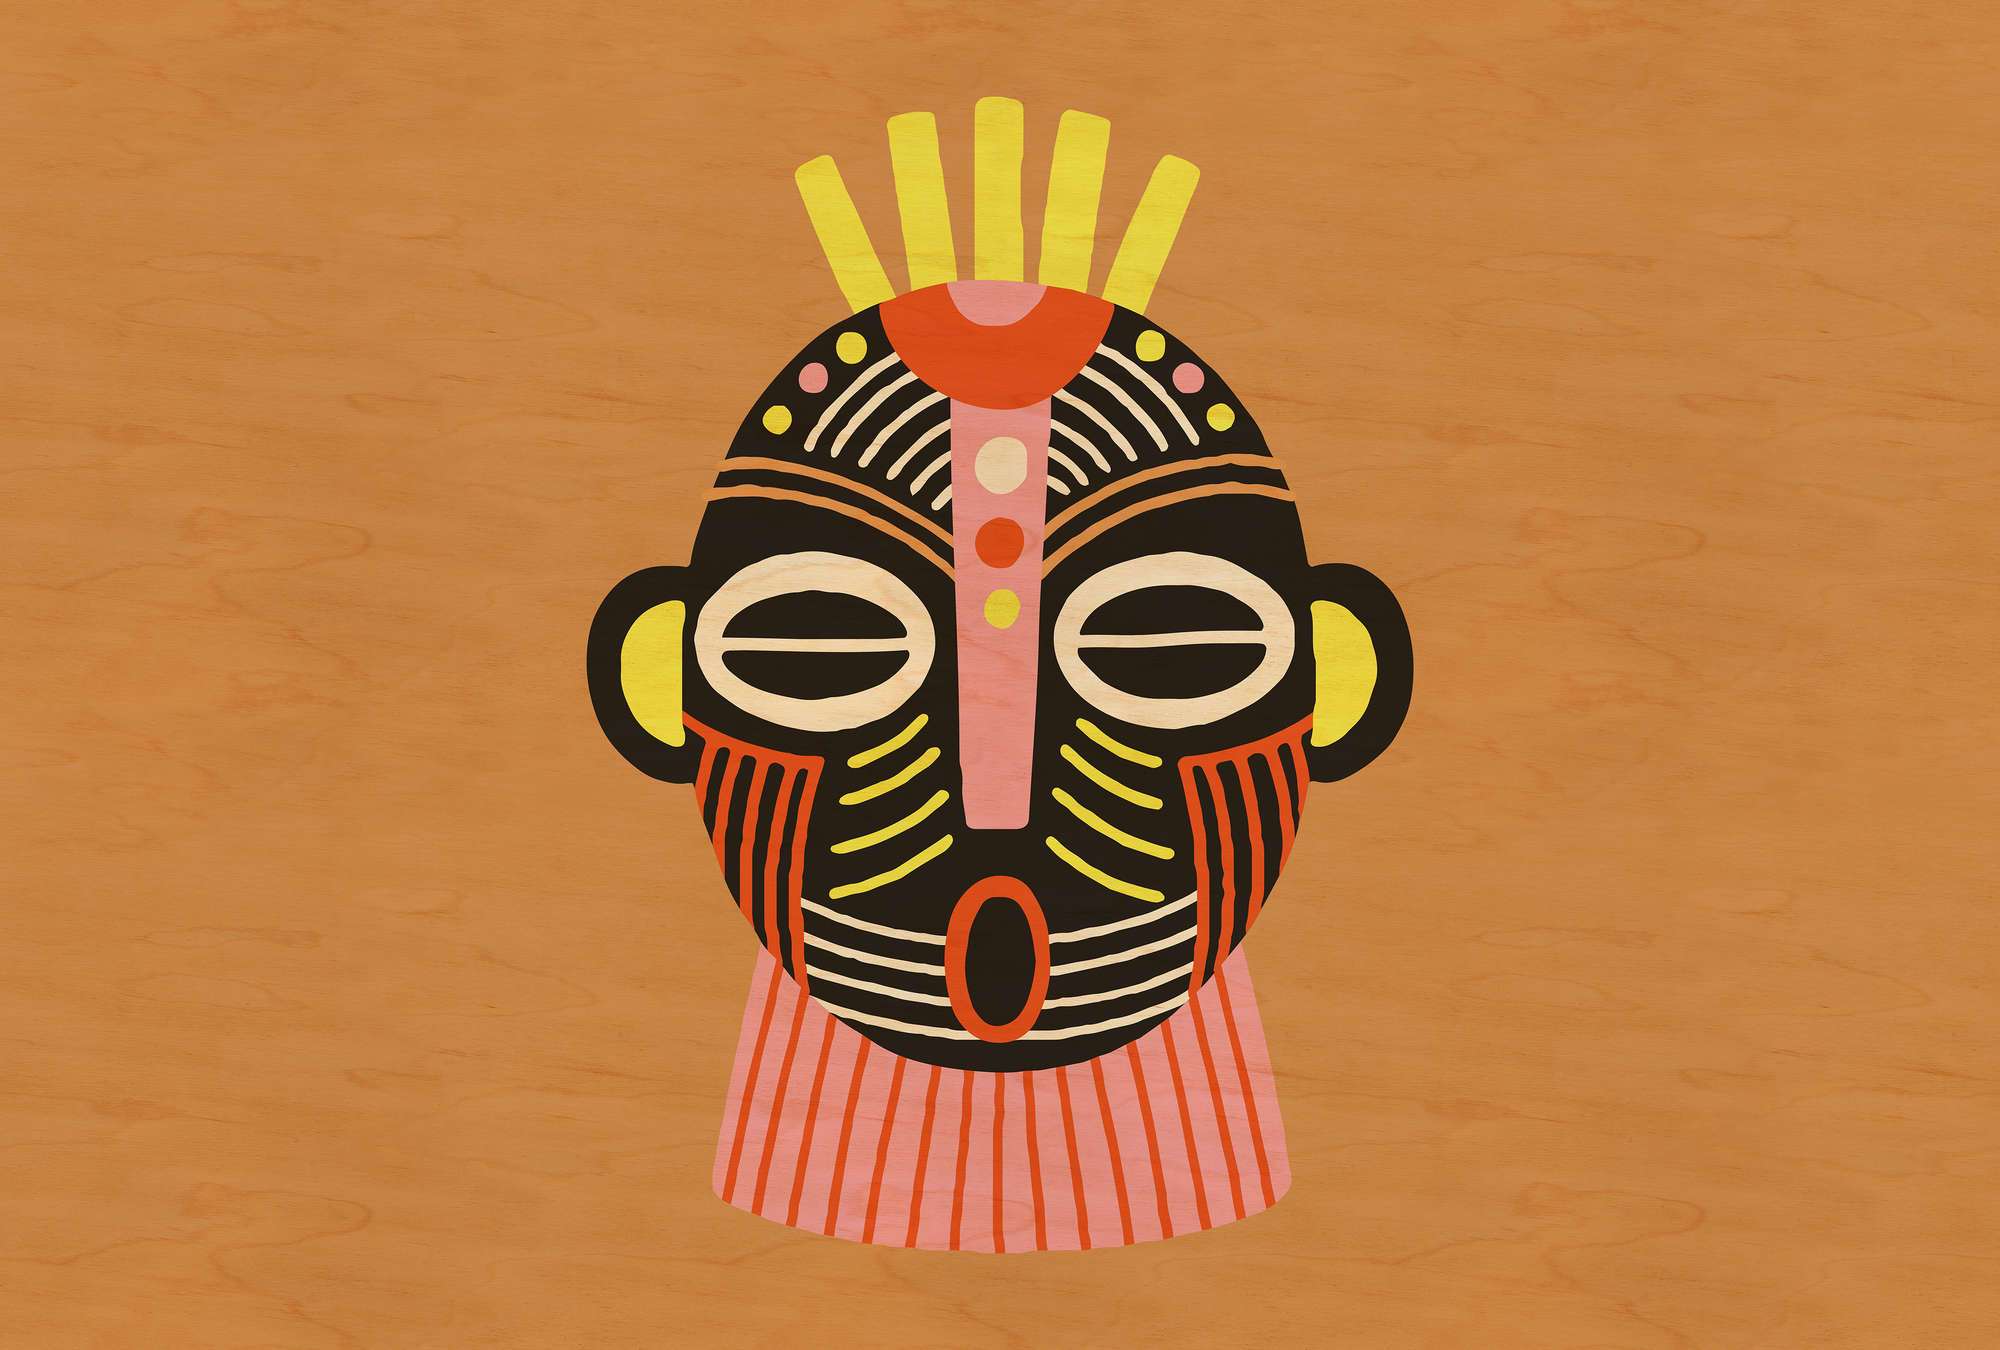             Overseas 4 - Papier peint Design Afrique Inspiration Masque
        